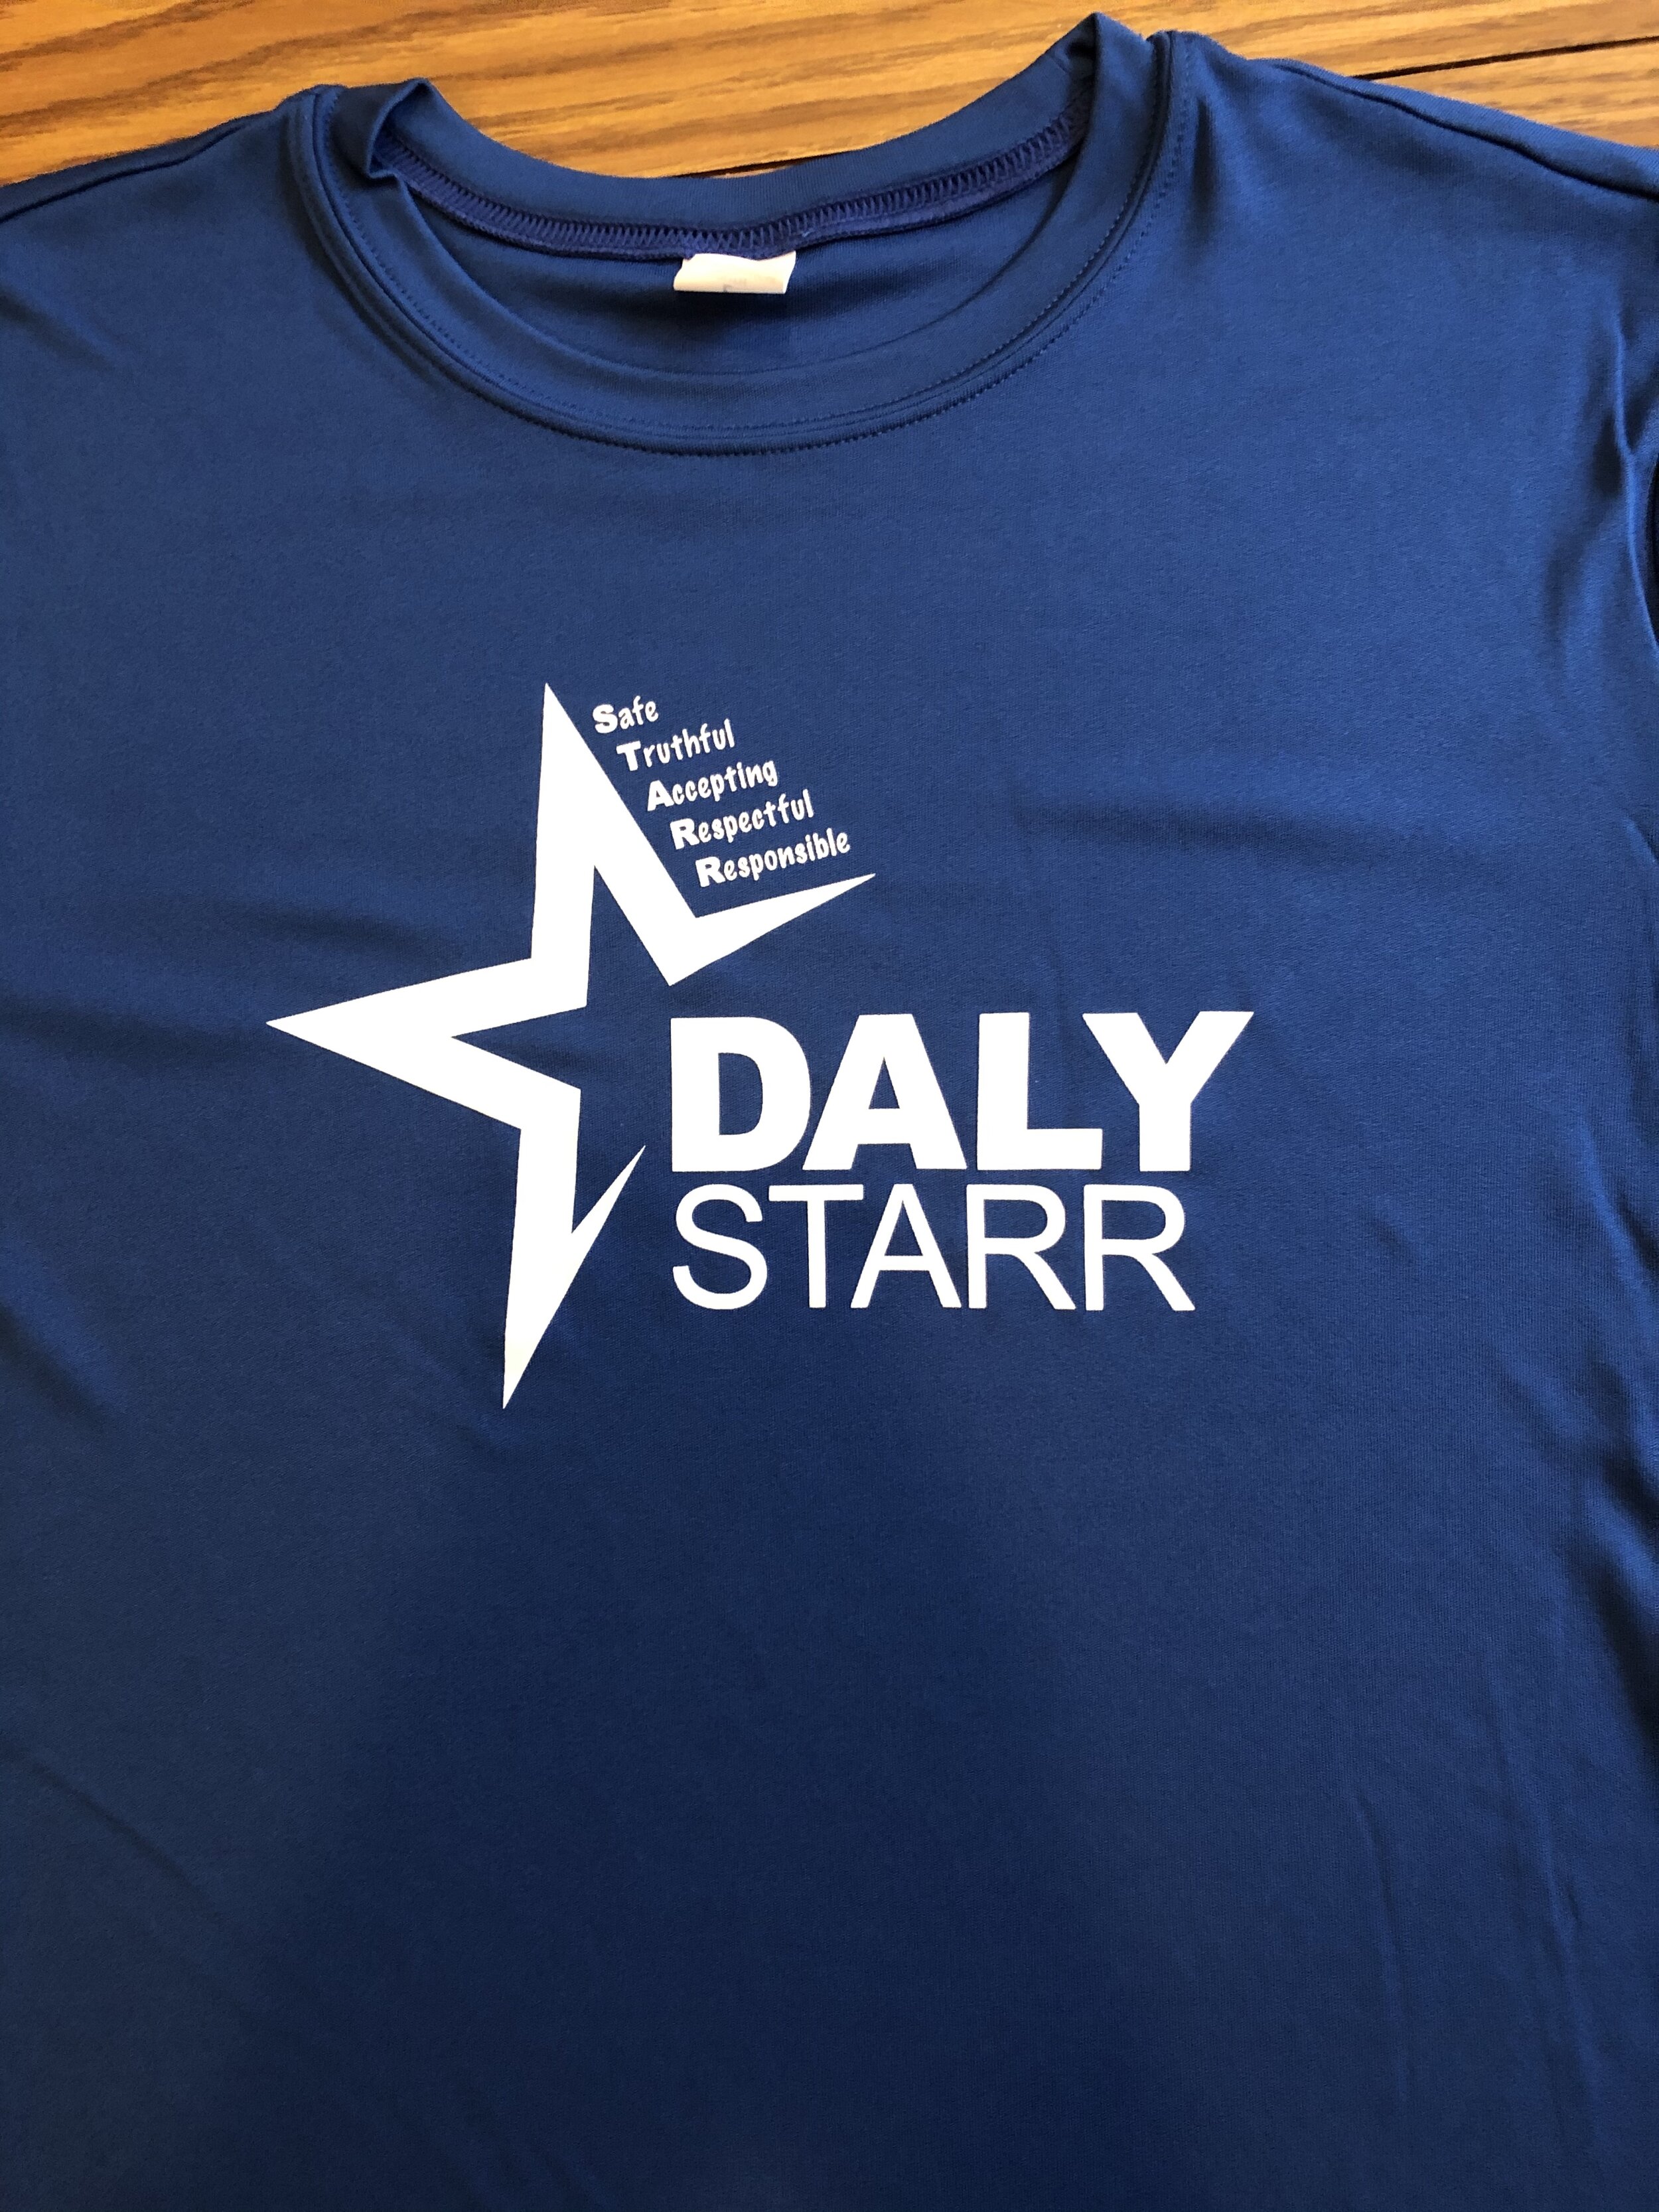 Tshirt with Daly Elementary School STARR logo